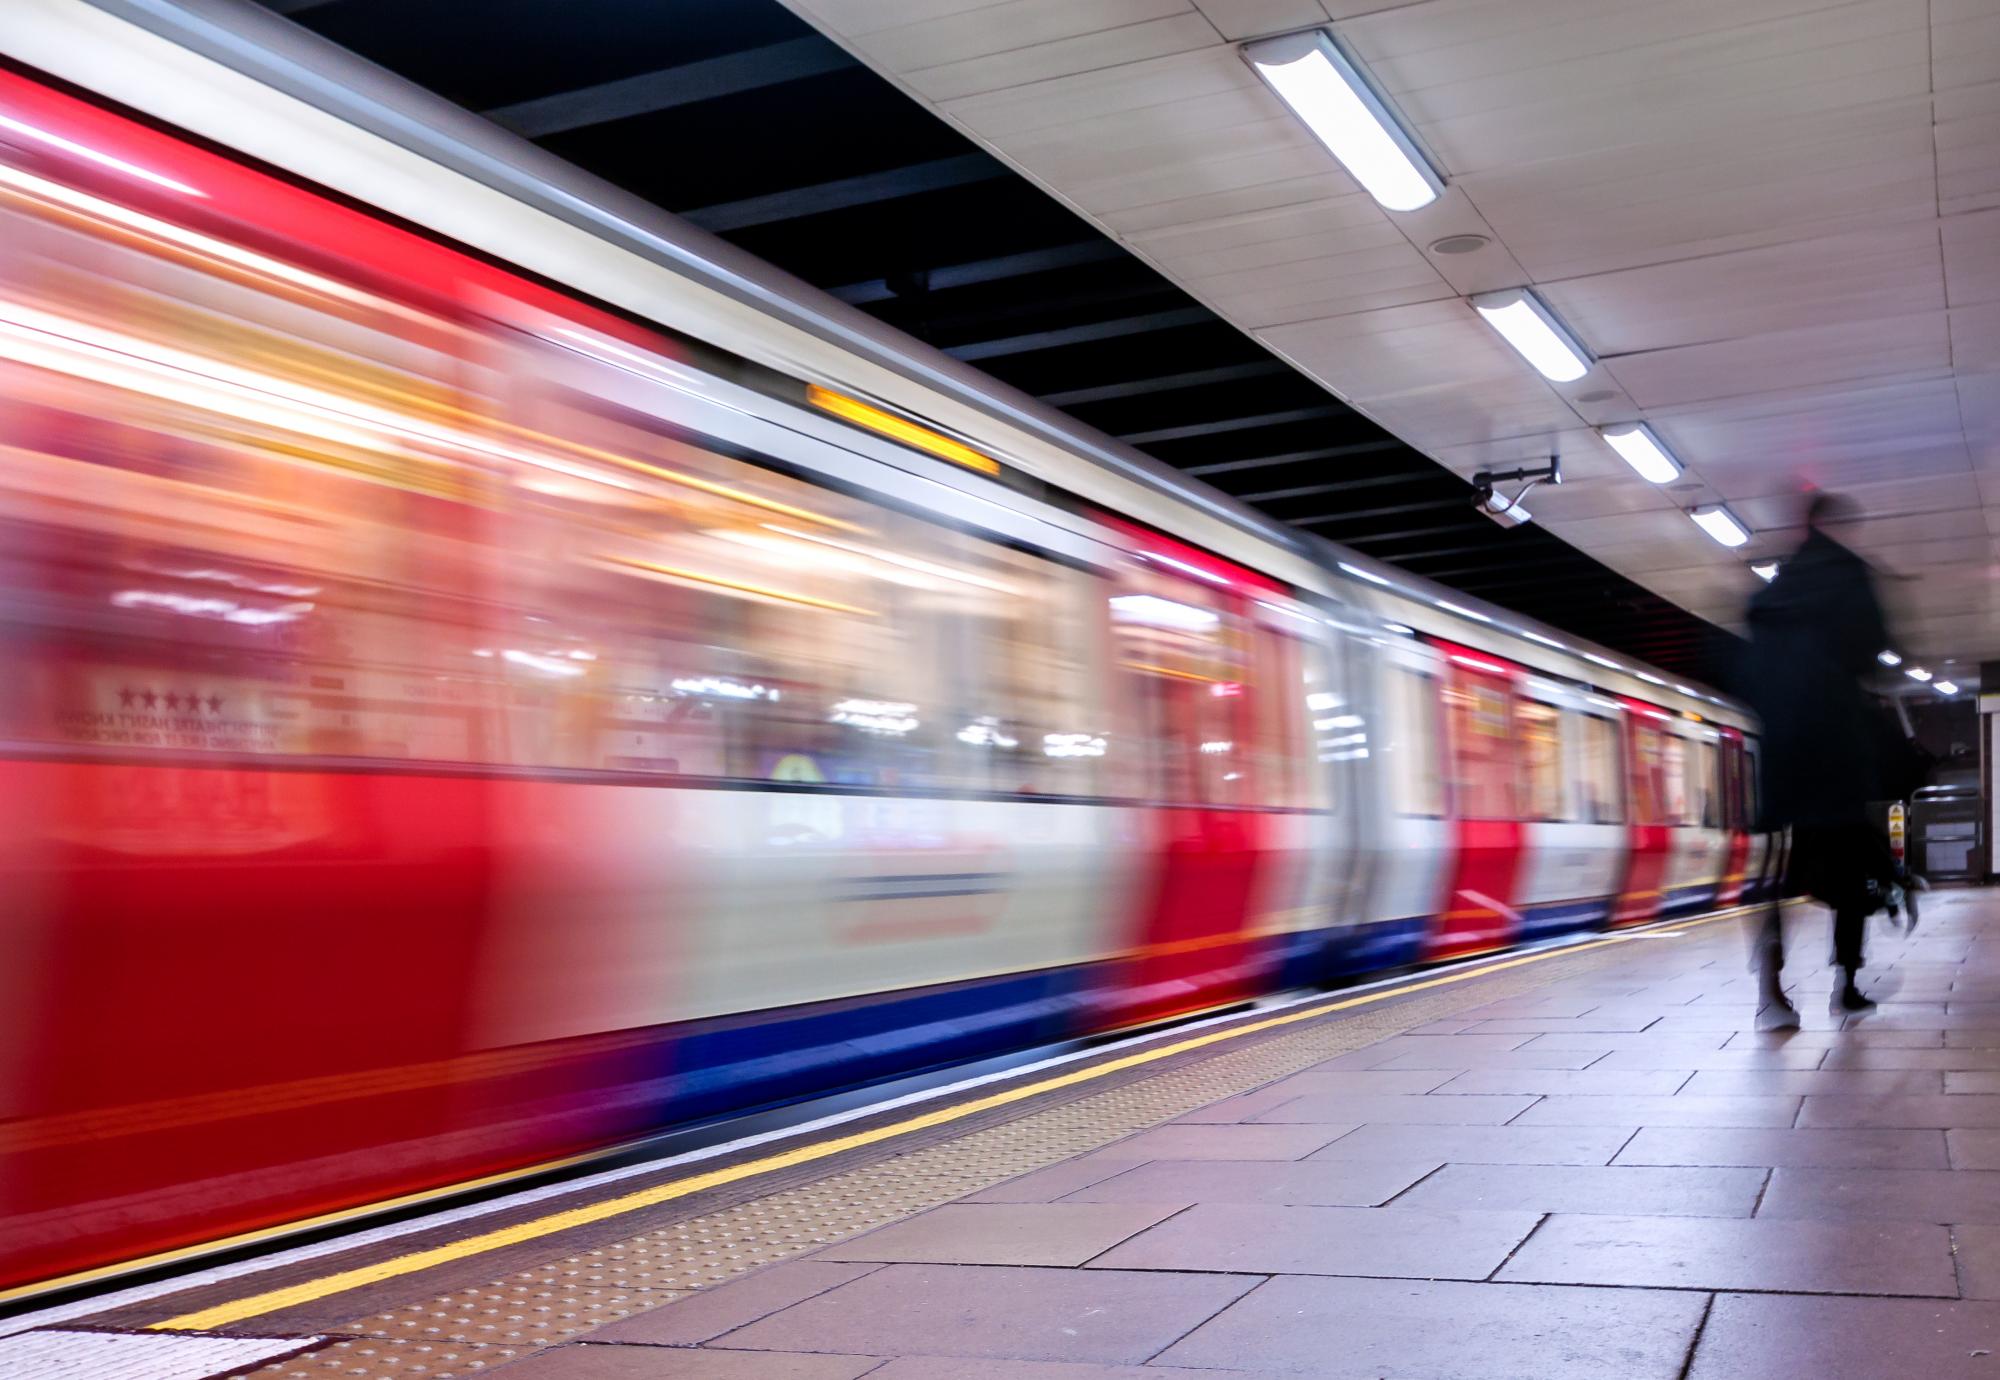 Moving train, motion blurred, London Underground - via Istock 